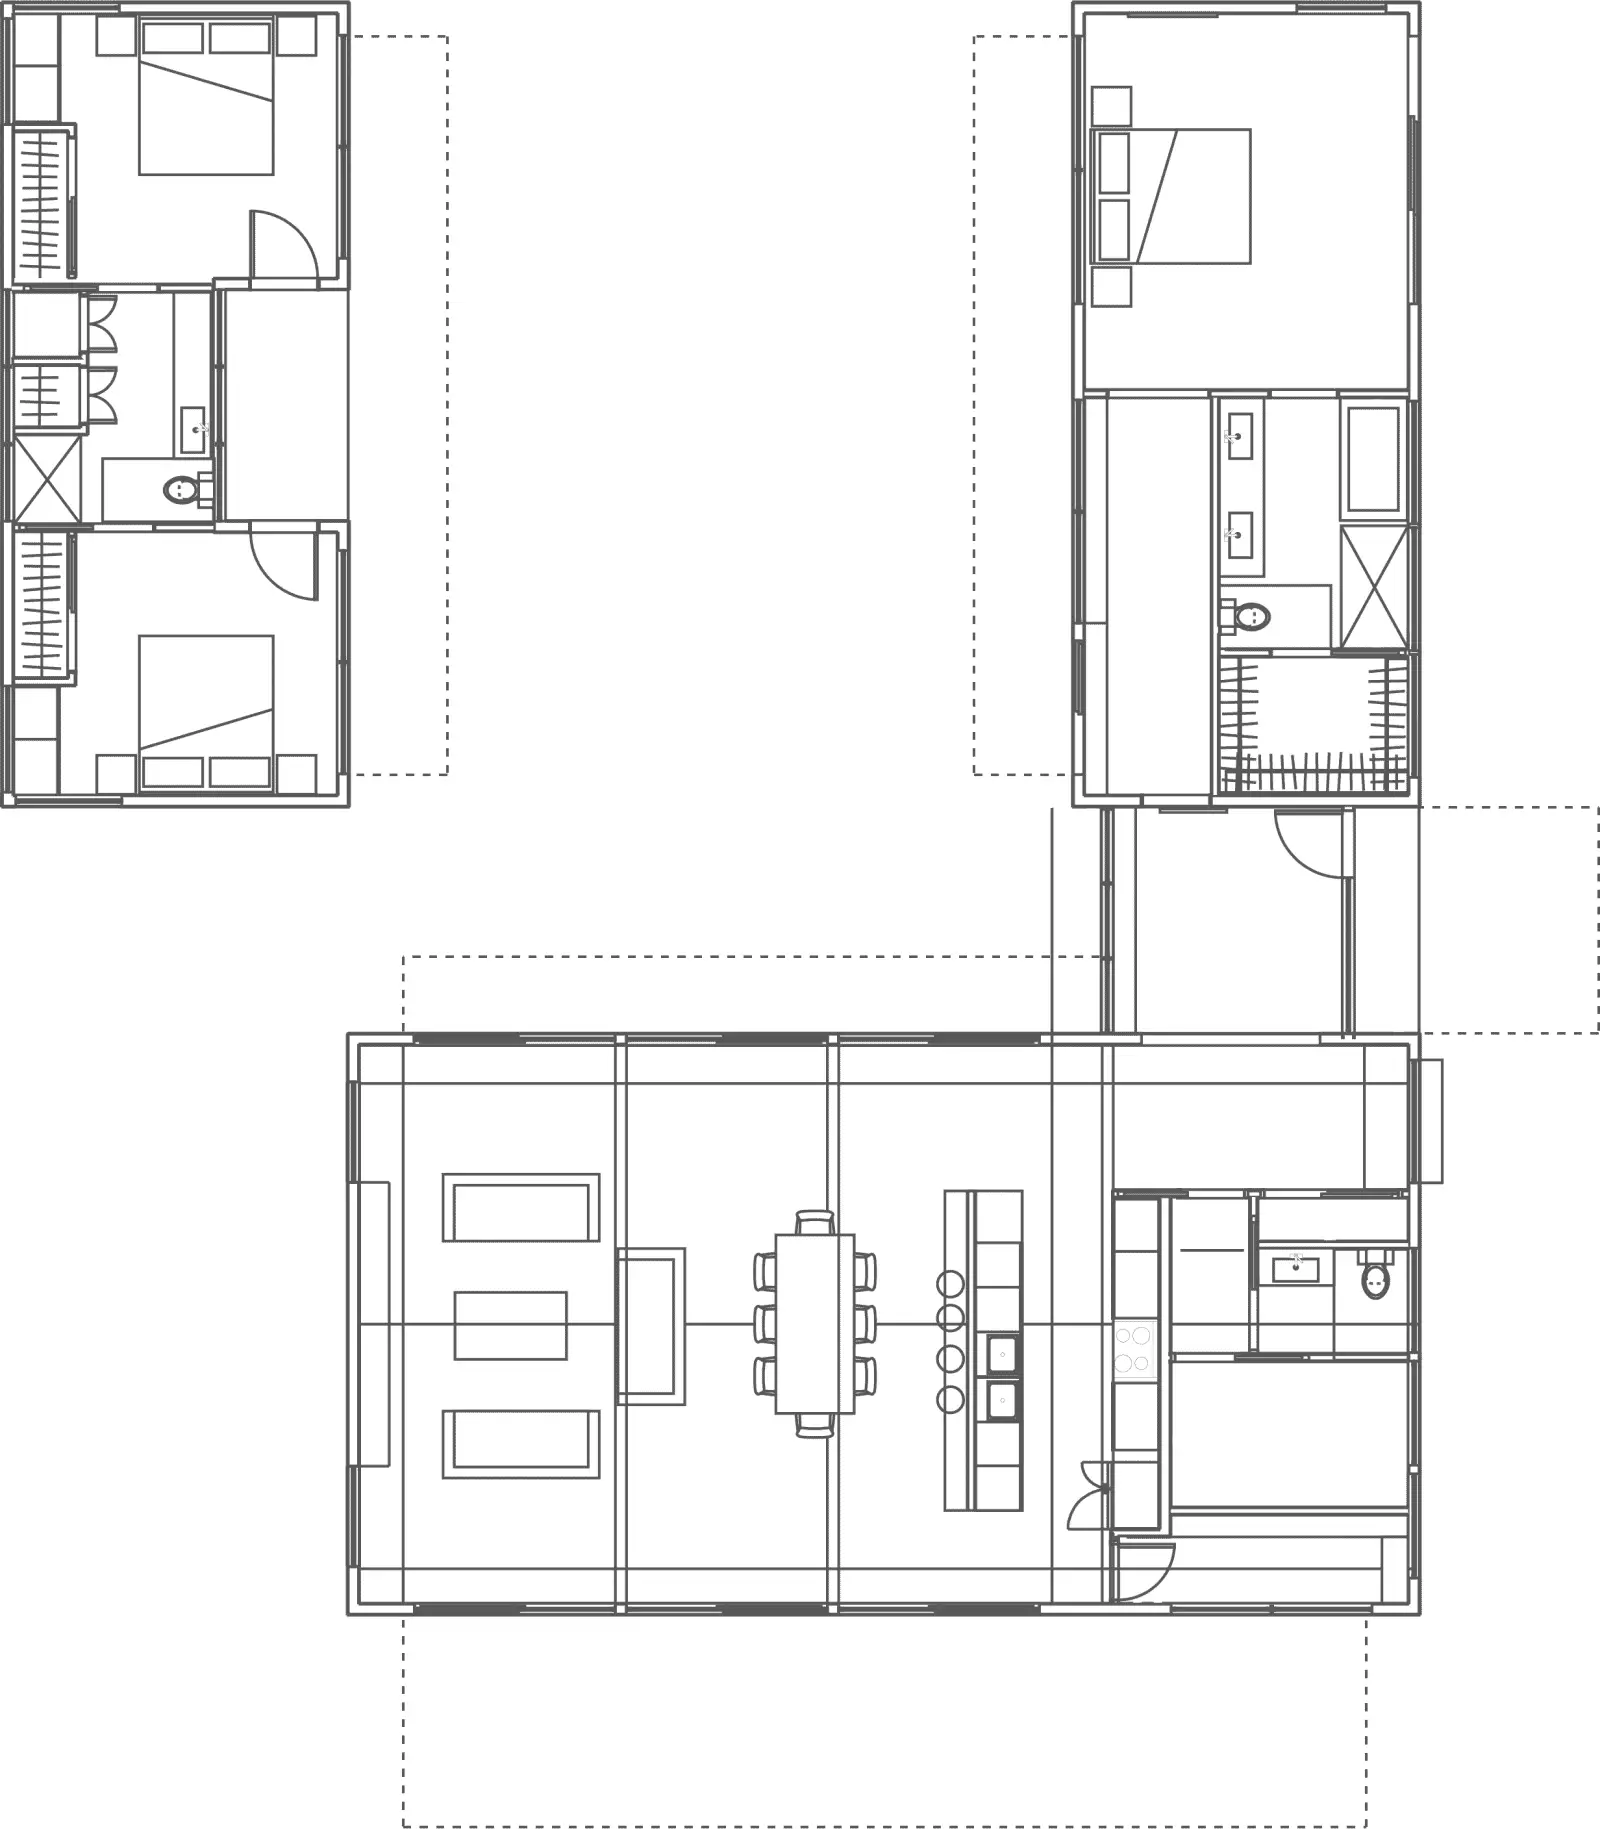 MA Modular Marfa model prefab home floor plan.